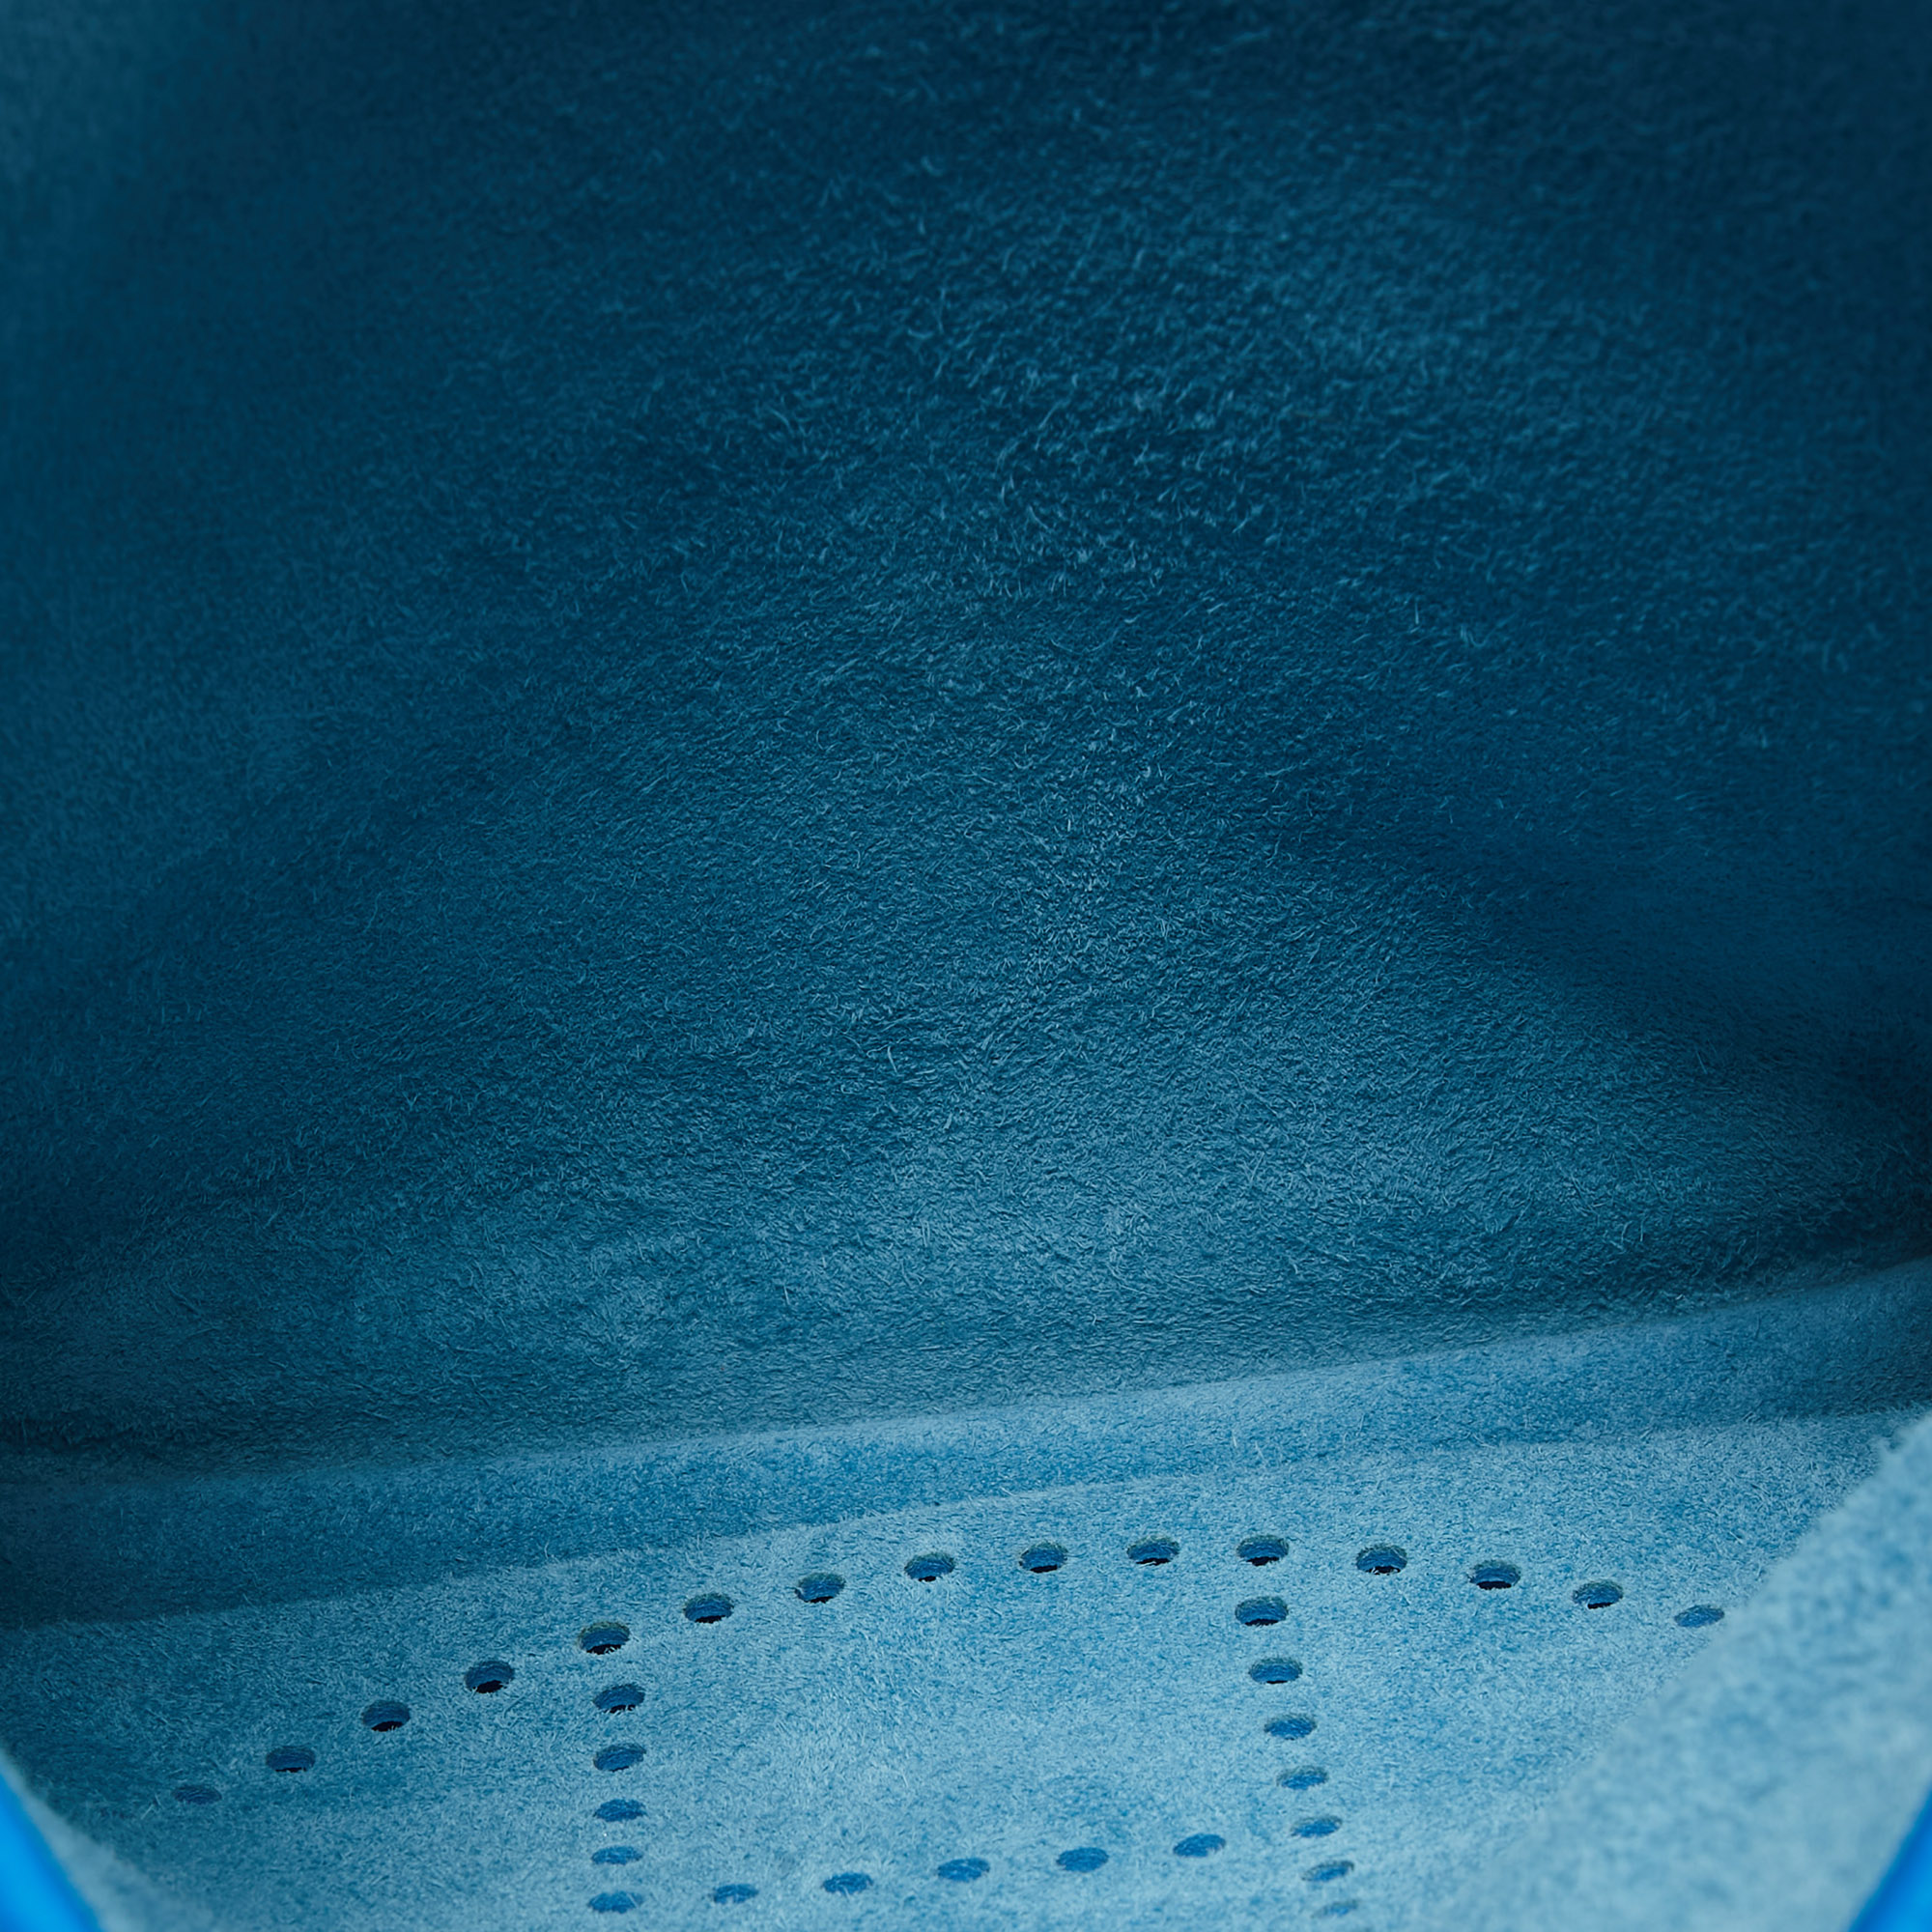 Hermès Bleu Zanzibar Taurillon Clemence Leather Evelyne III PM Bag